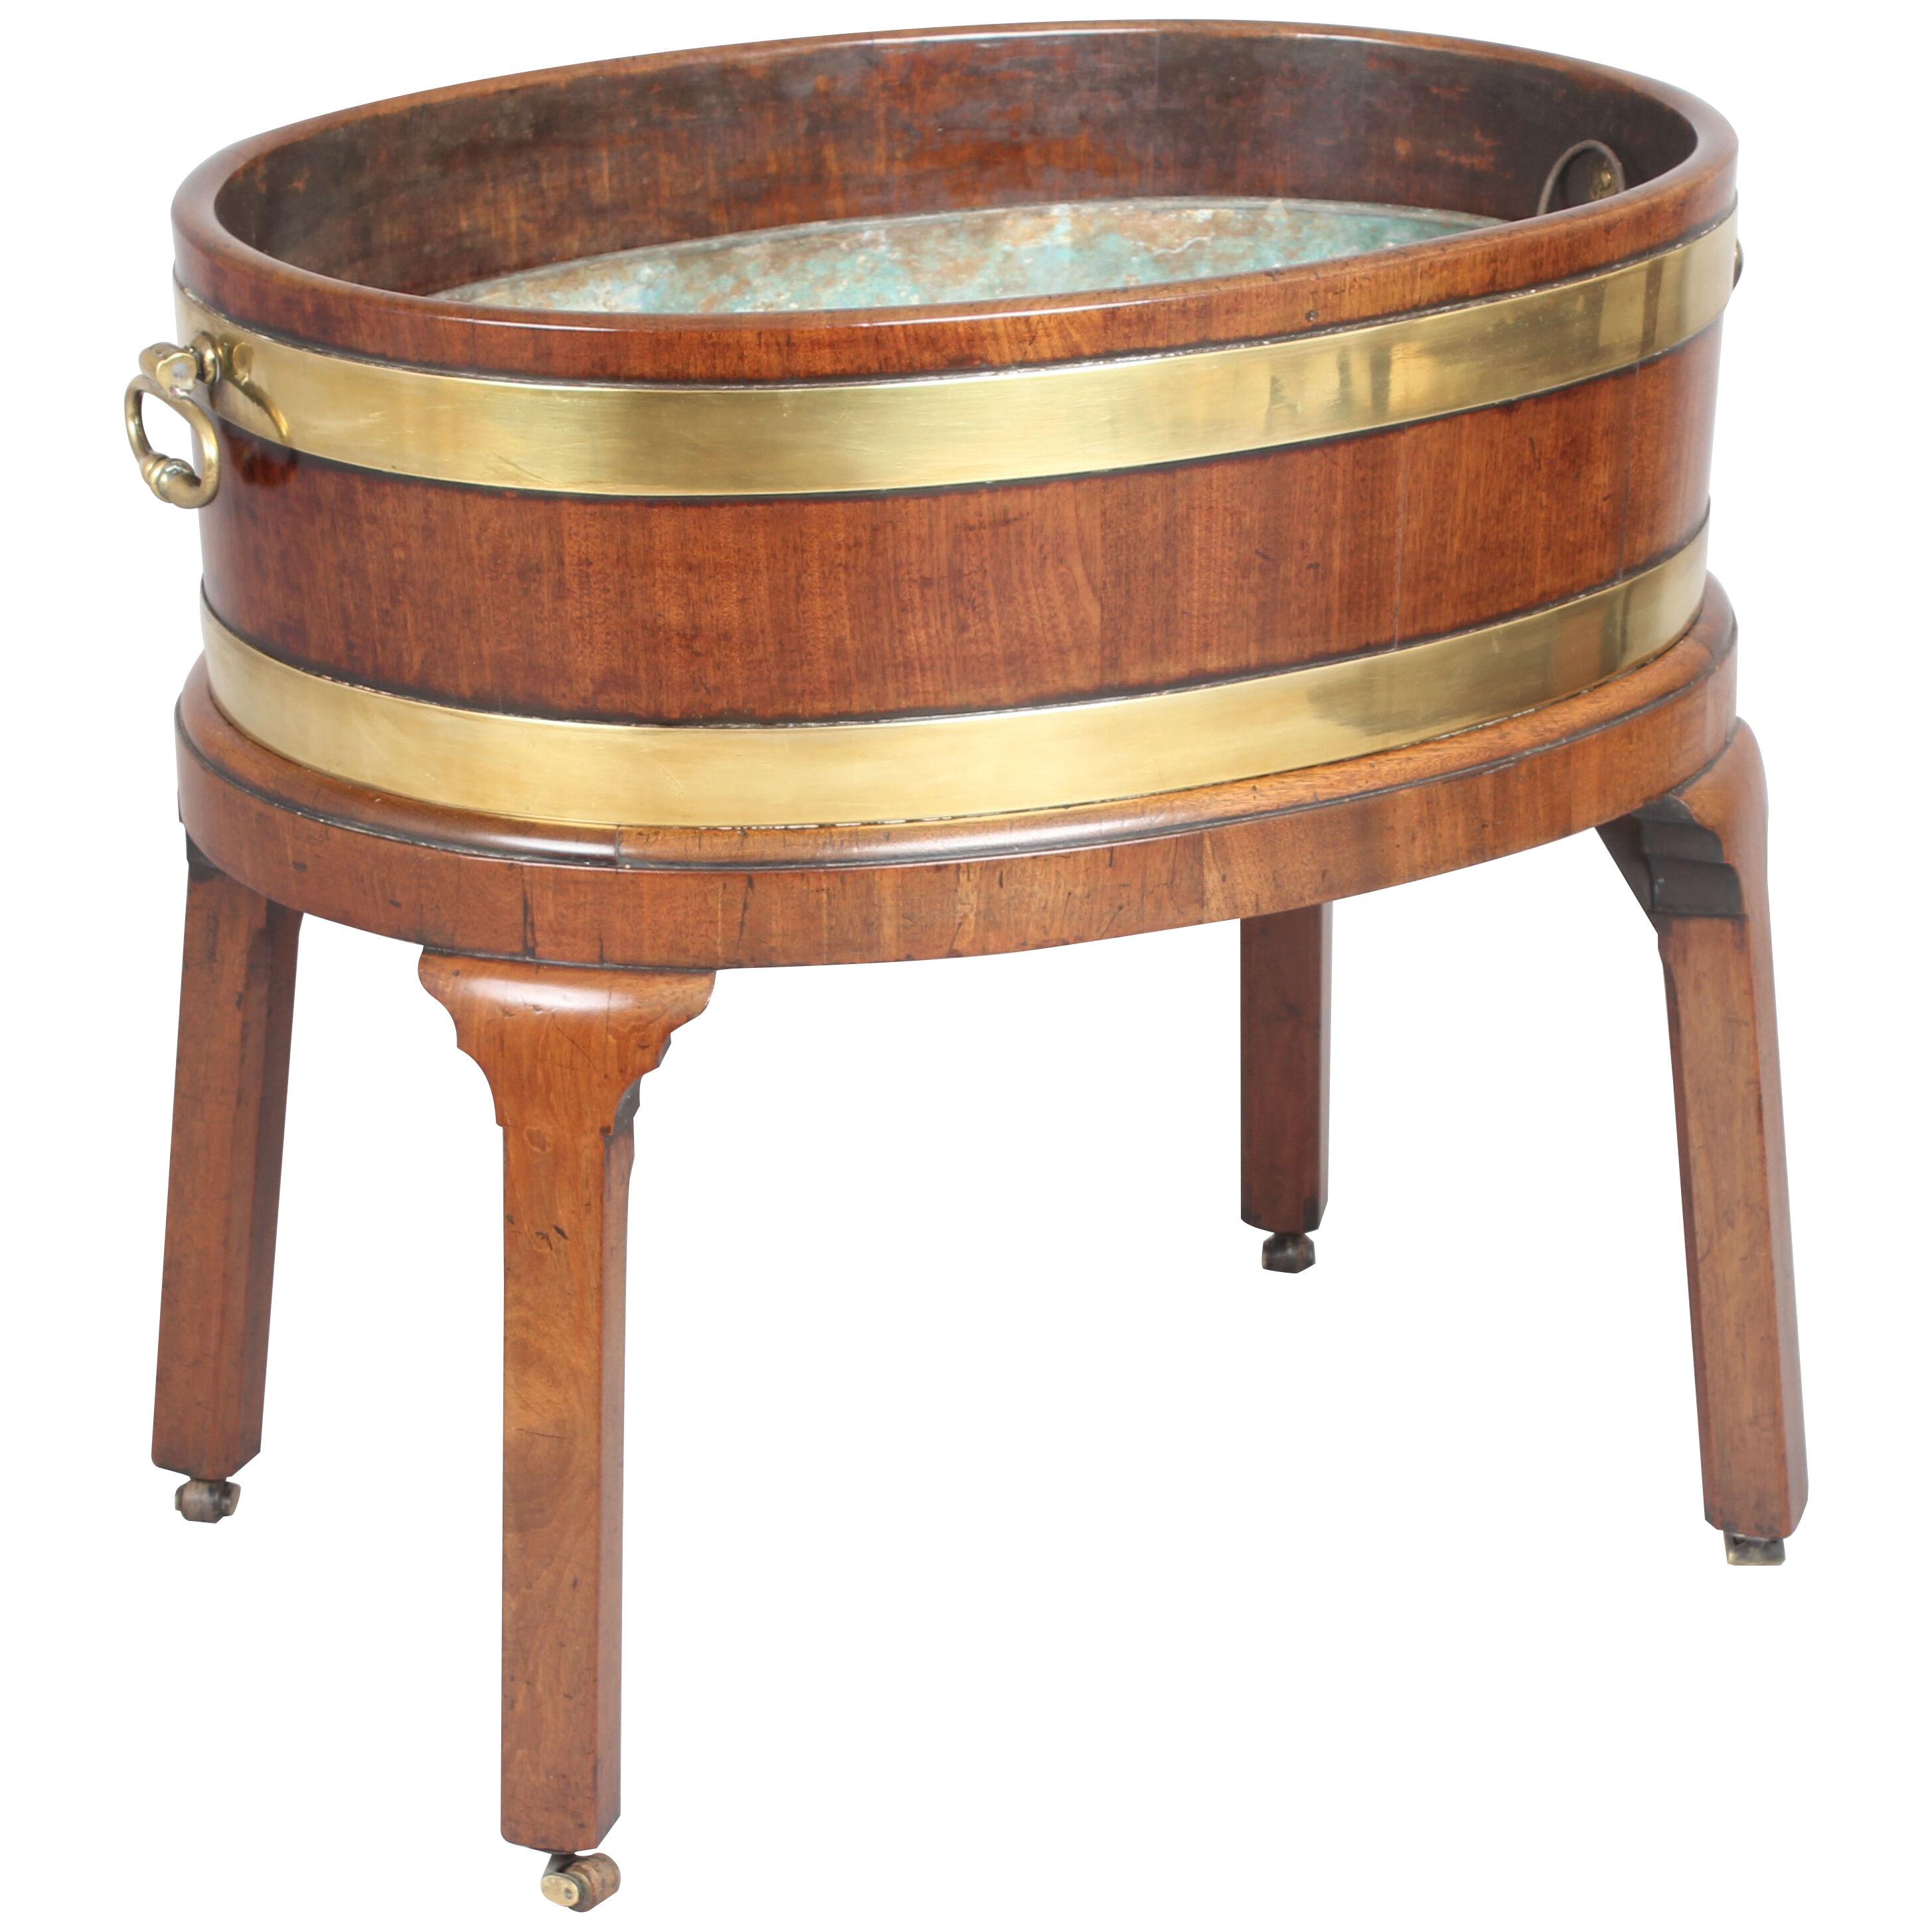 George III period mahogany oval wine-cooler